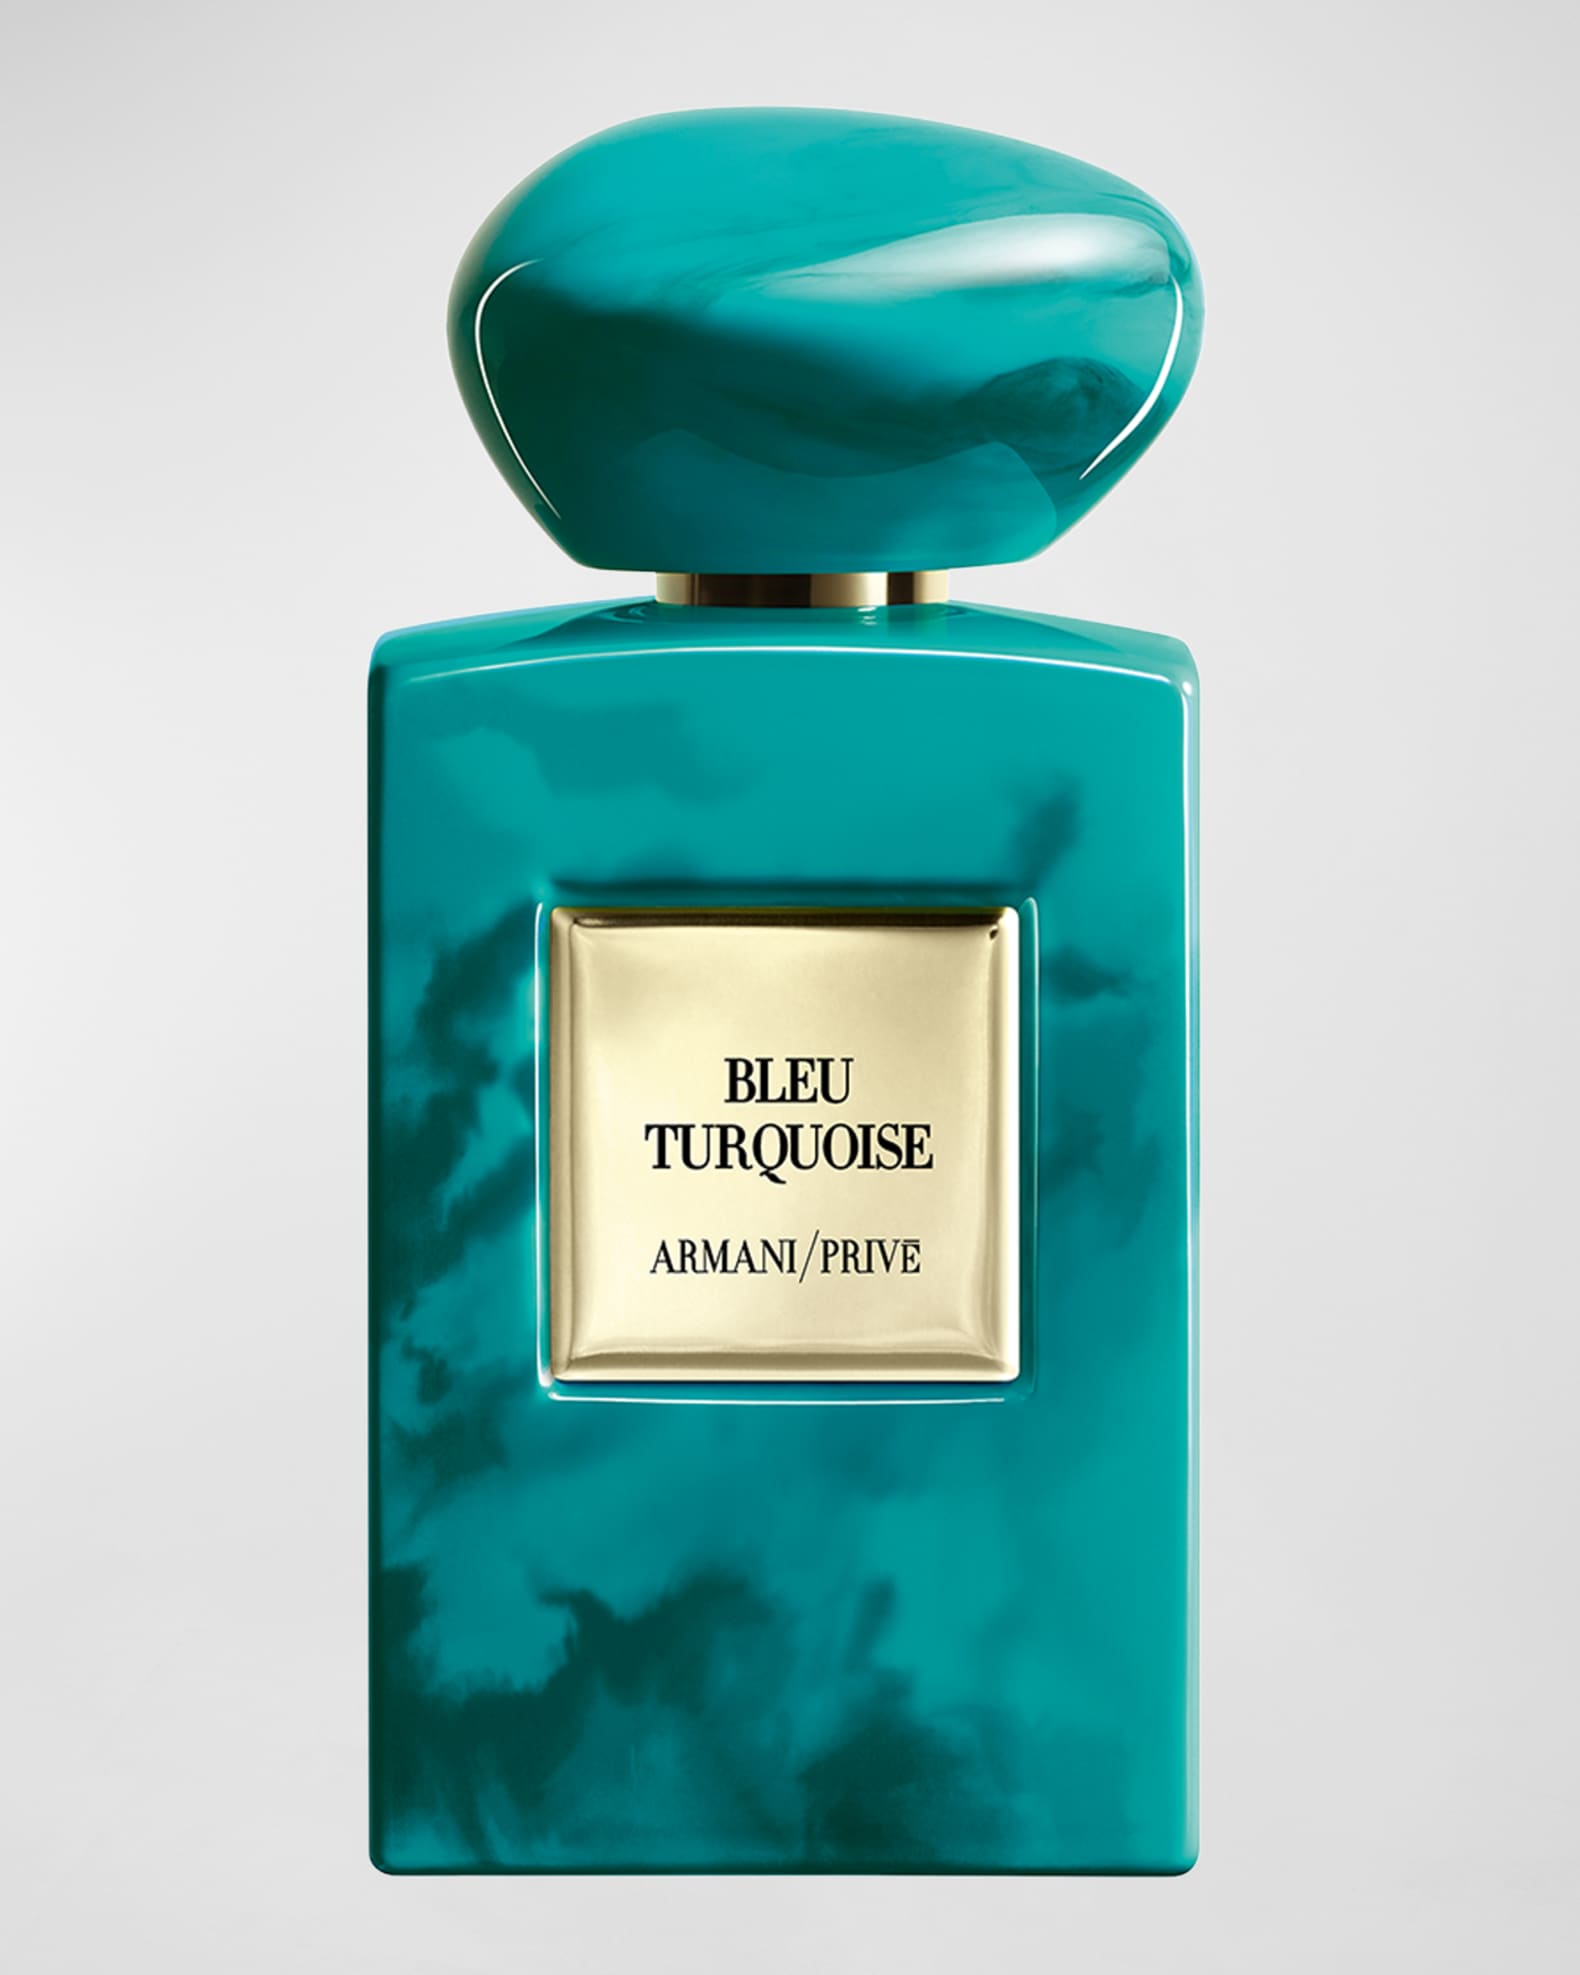 Giorgio Armani Prive Bleu Turquoise Eau de Parfum 3.4 oz/100 ml Spray